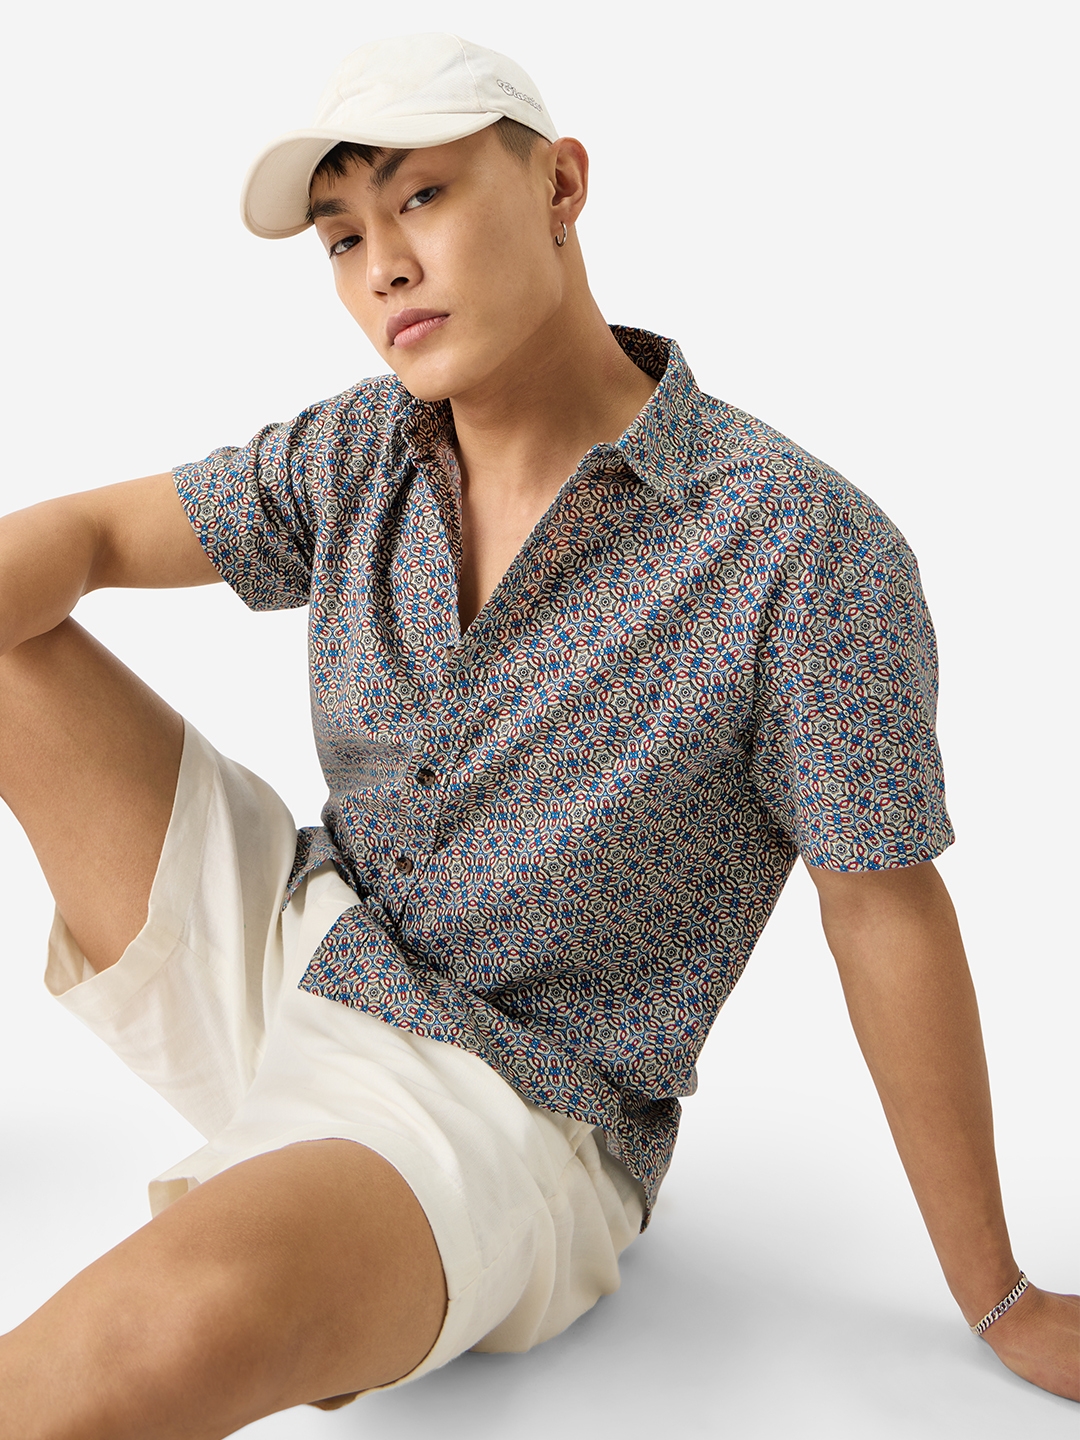 Men's Eclectic Printed Casual Shirt